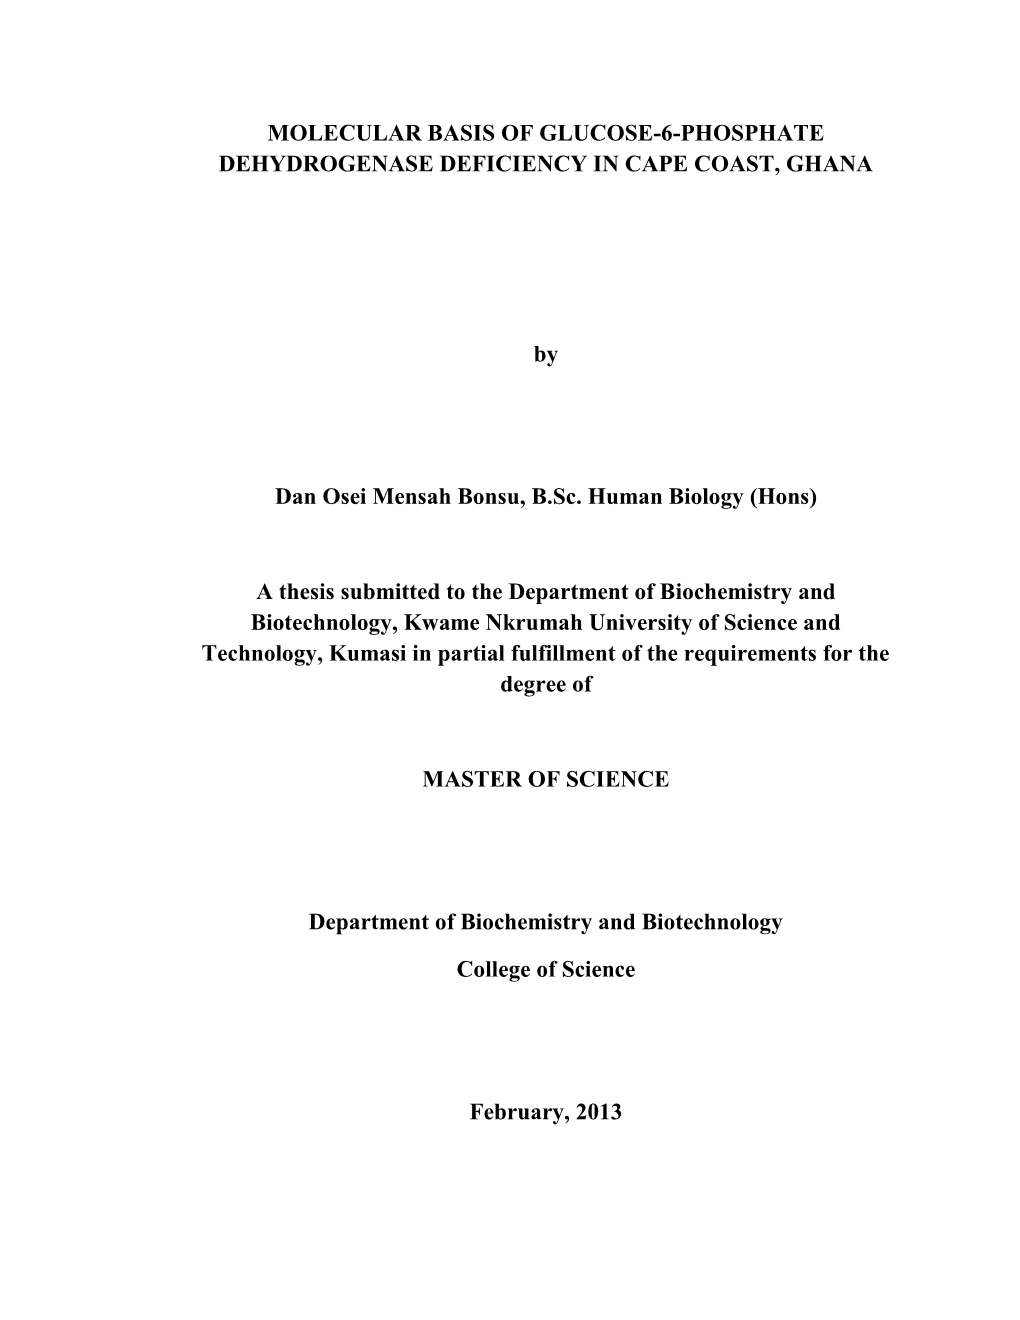 MOLECULAR BASIS of GLUCOSE-6-PHOSPHATE DEHYDROGENASE DEFICIENCY in CAPE COAST, GHANA by Dan Osei Mensah Bonsu, B.Sc. Human Biolo